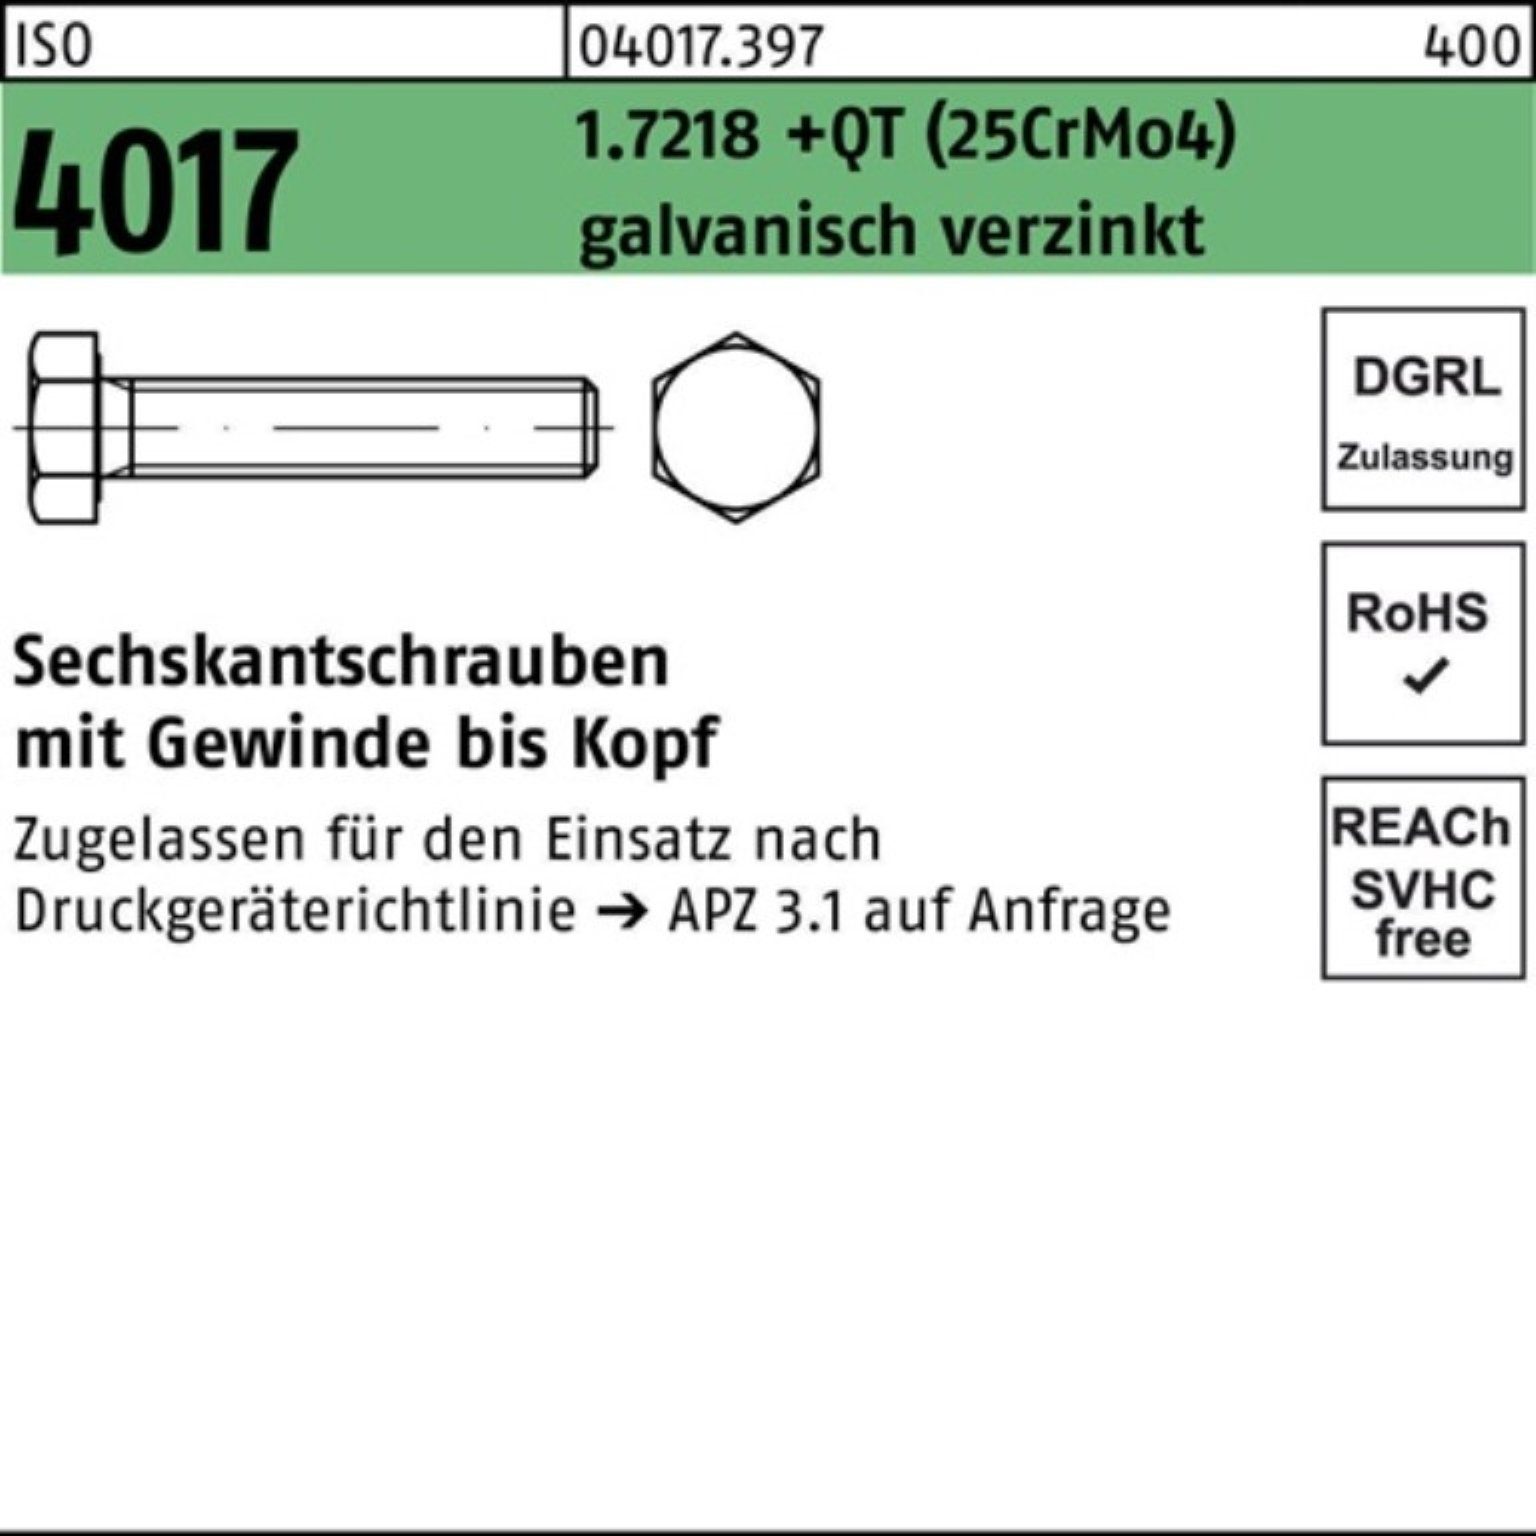 Bufab Sechskantschraube Pack M16x70 4017 100er ISO VG (25CrMo4) +QT g Sechskantschraube 1.7218